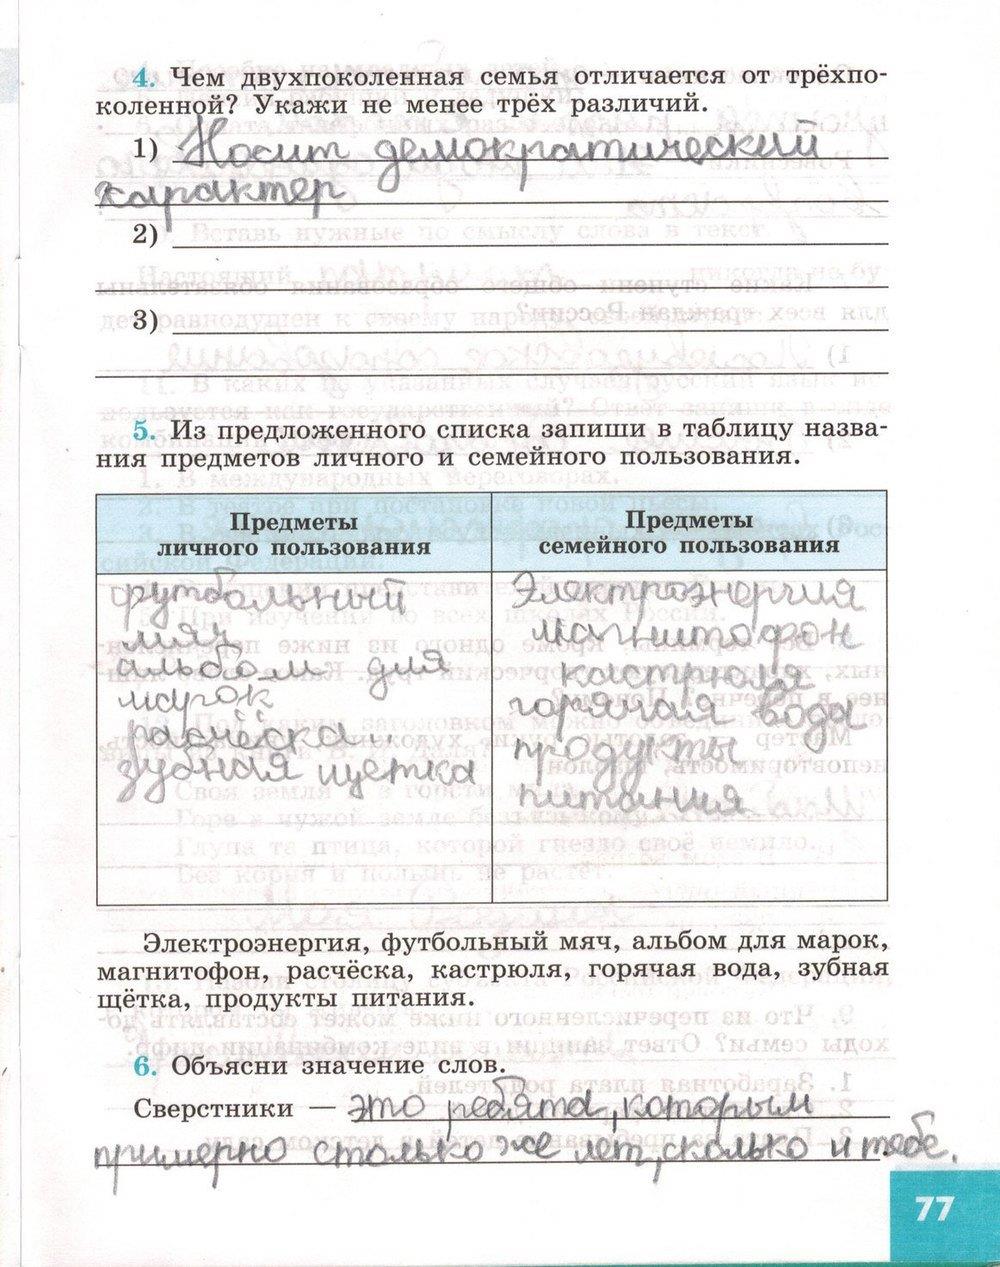 гдз 5 класс рабочая тетрадь страница 77 обществознание Иванова, Хотеенкова